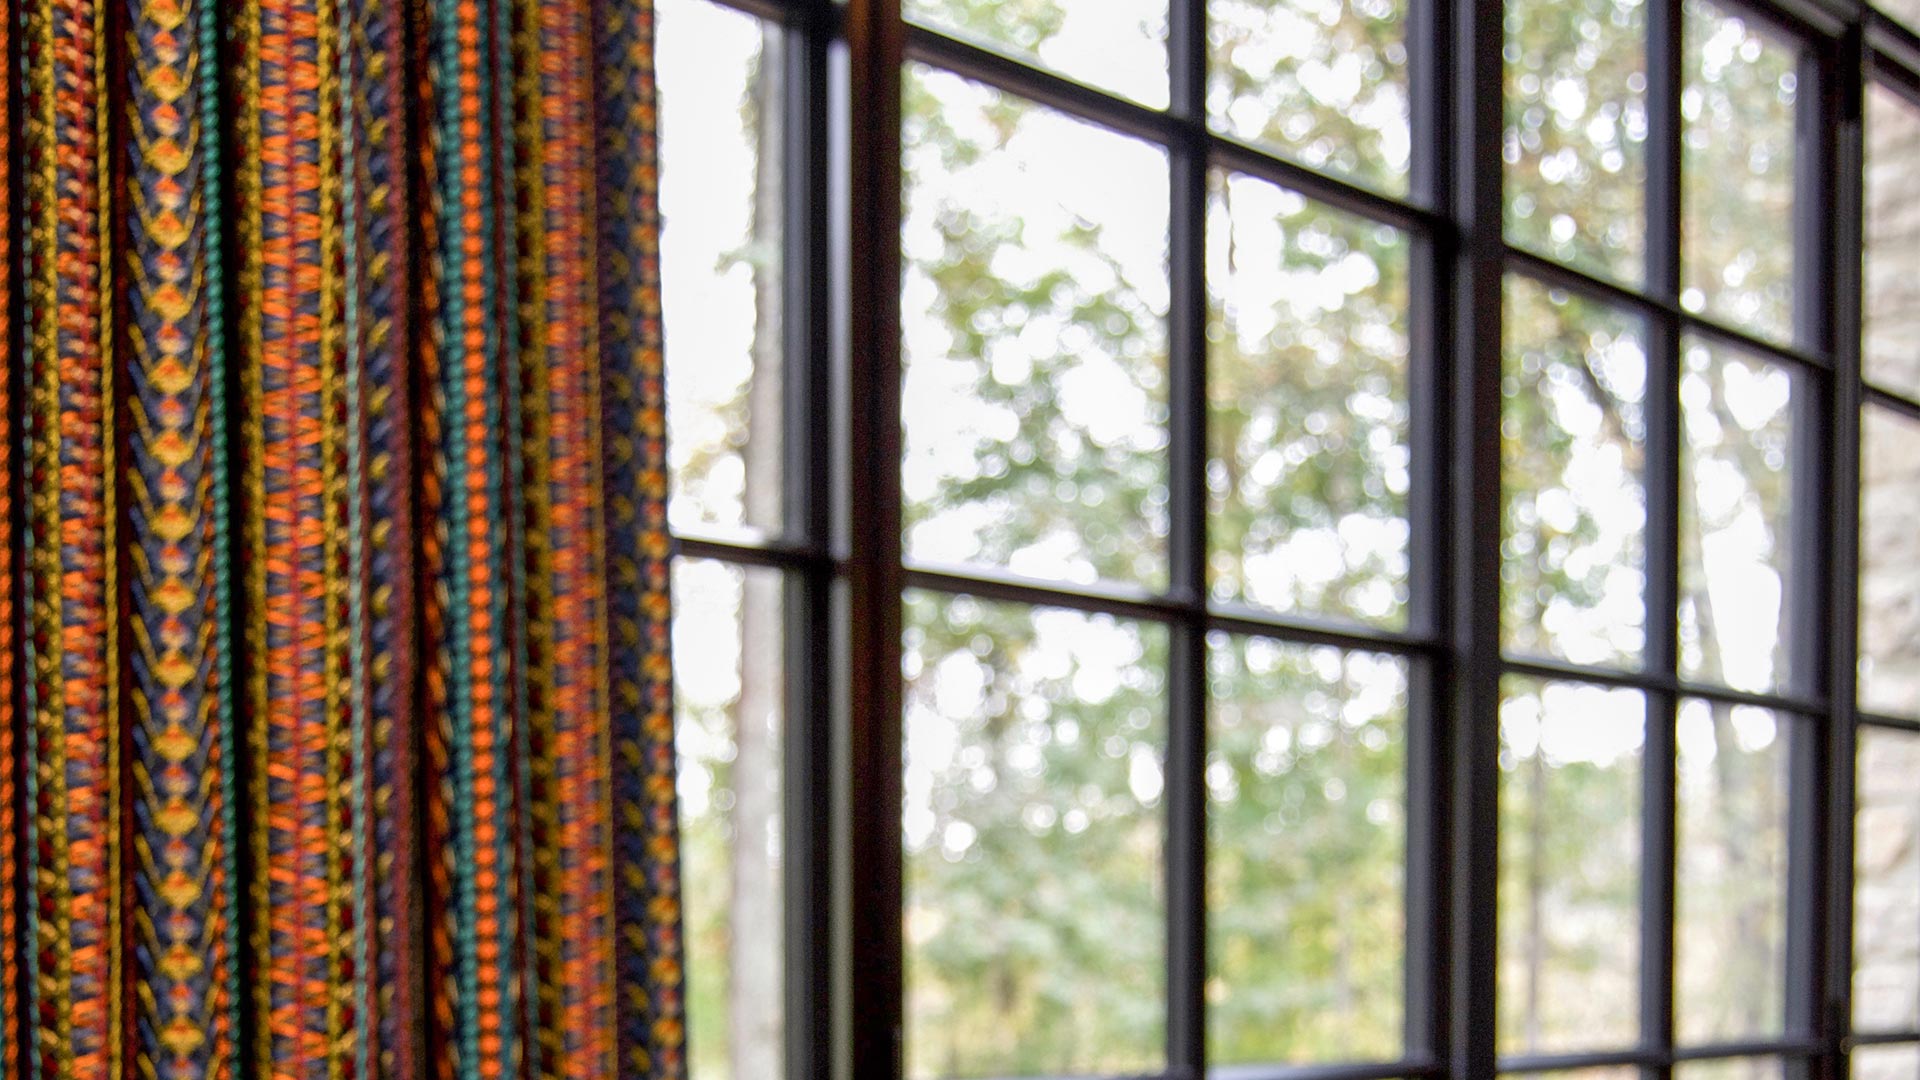 Steel glazed windows with curtains